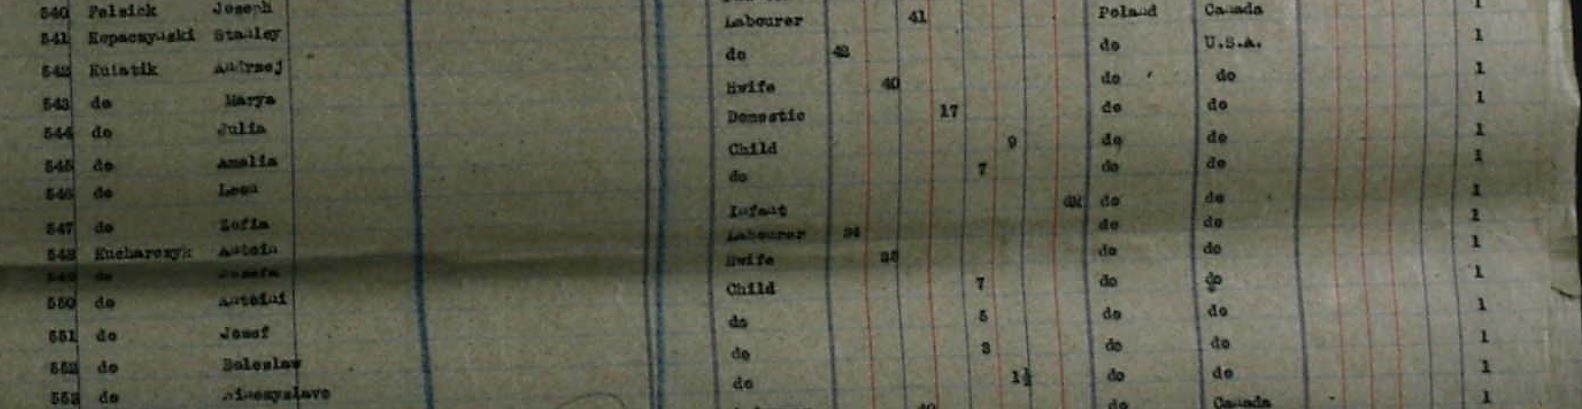 1921 Andrzej Kwiatek family to Poland via Montreal and Liverpool -names